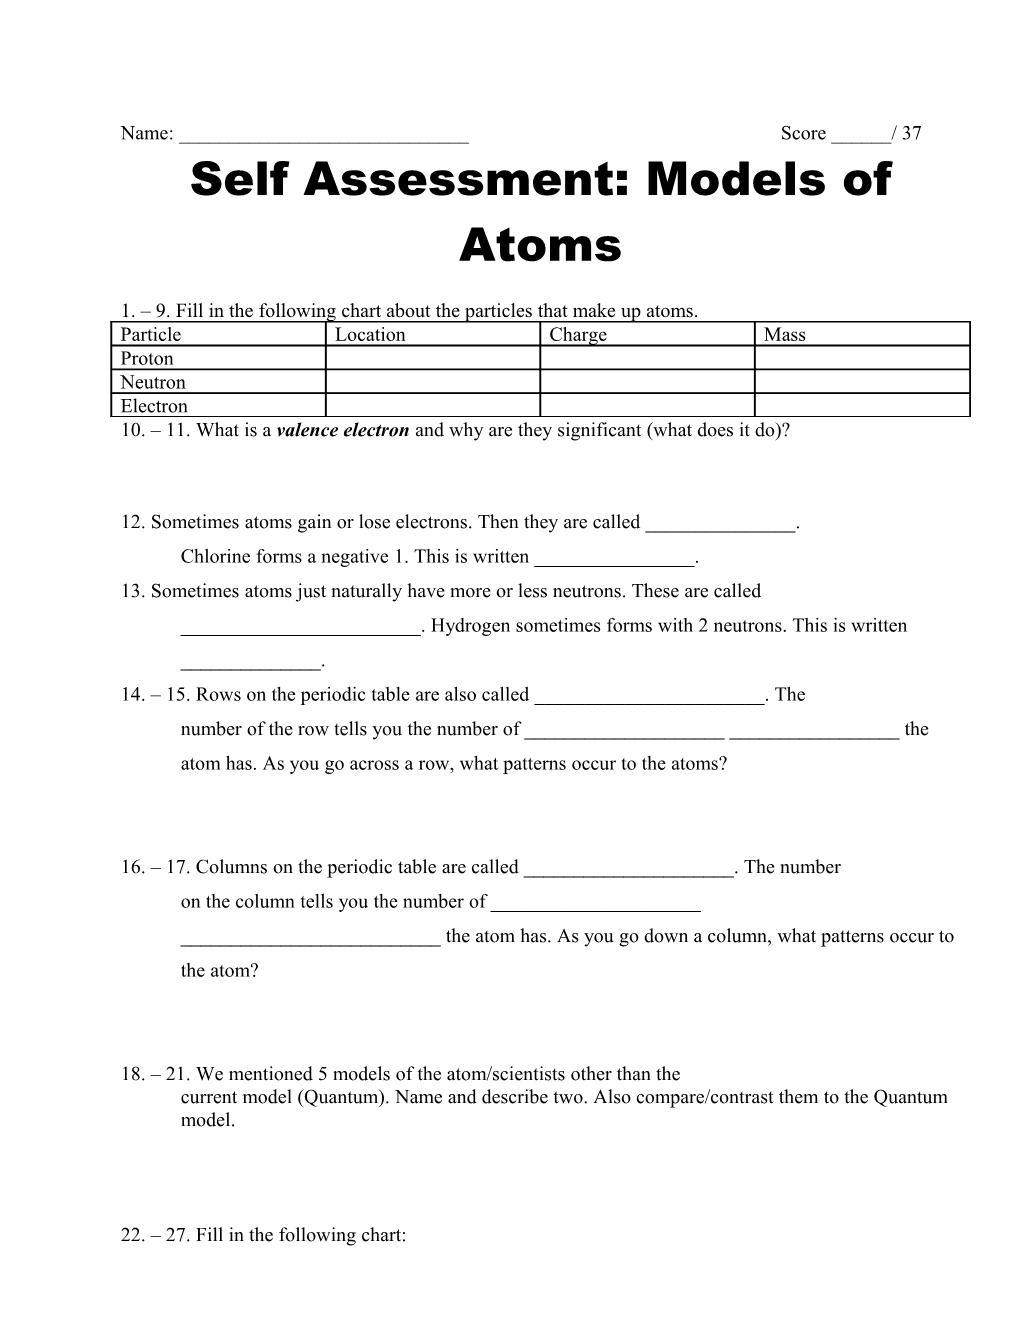 Self Assessment: Models of Atoms